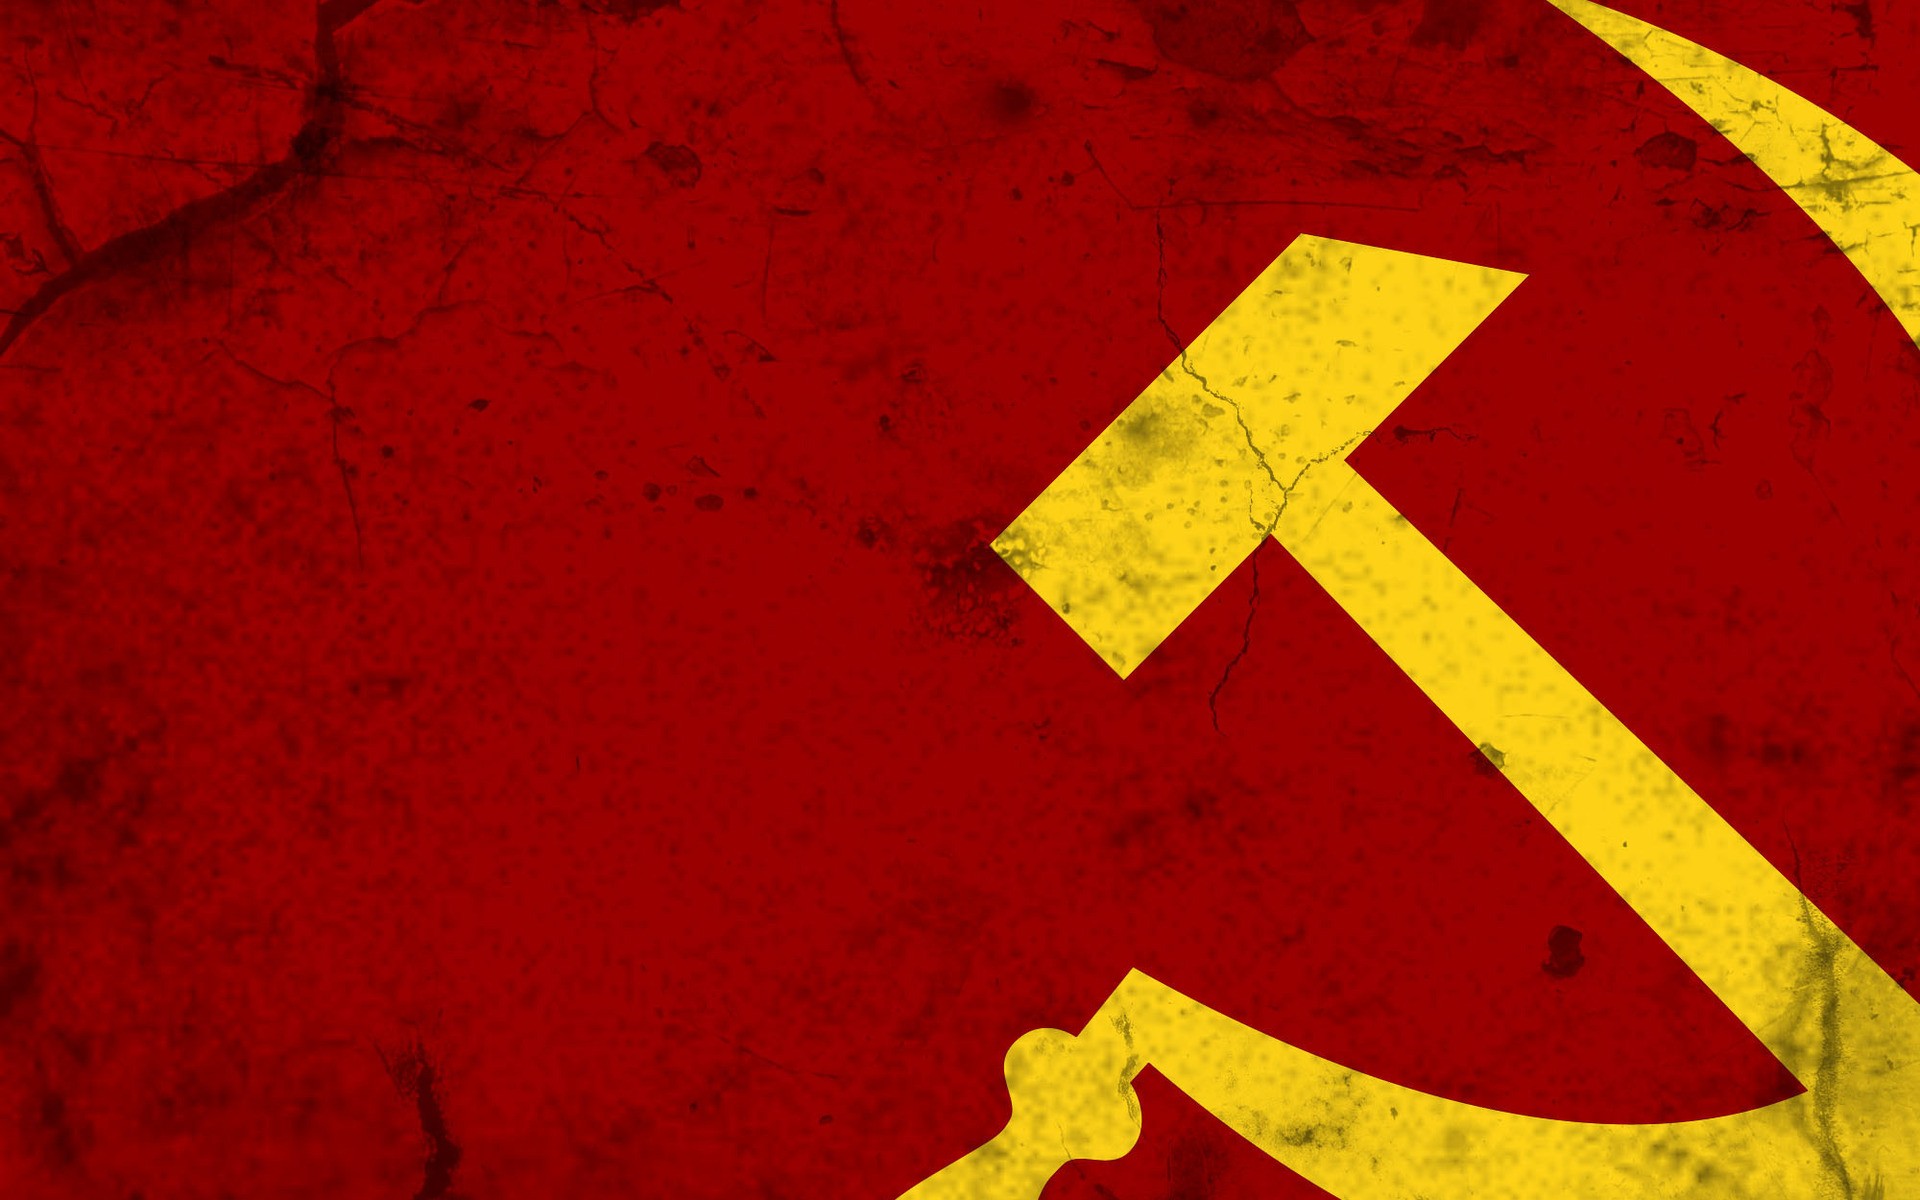  ussr sickle sickle soviet russia soviet union wallpaper background